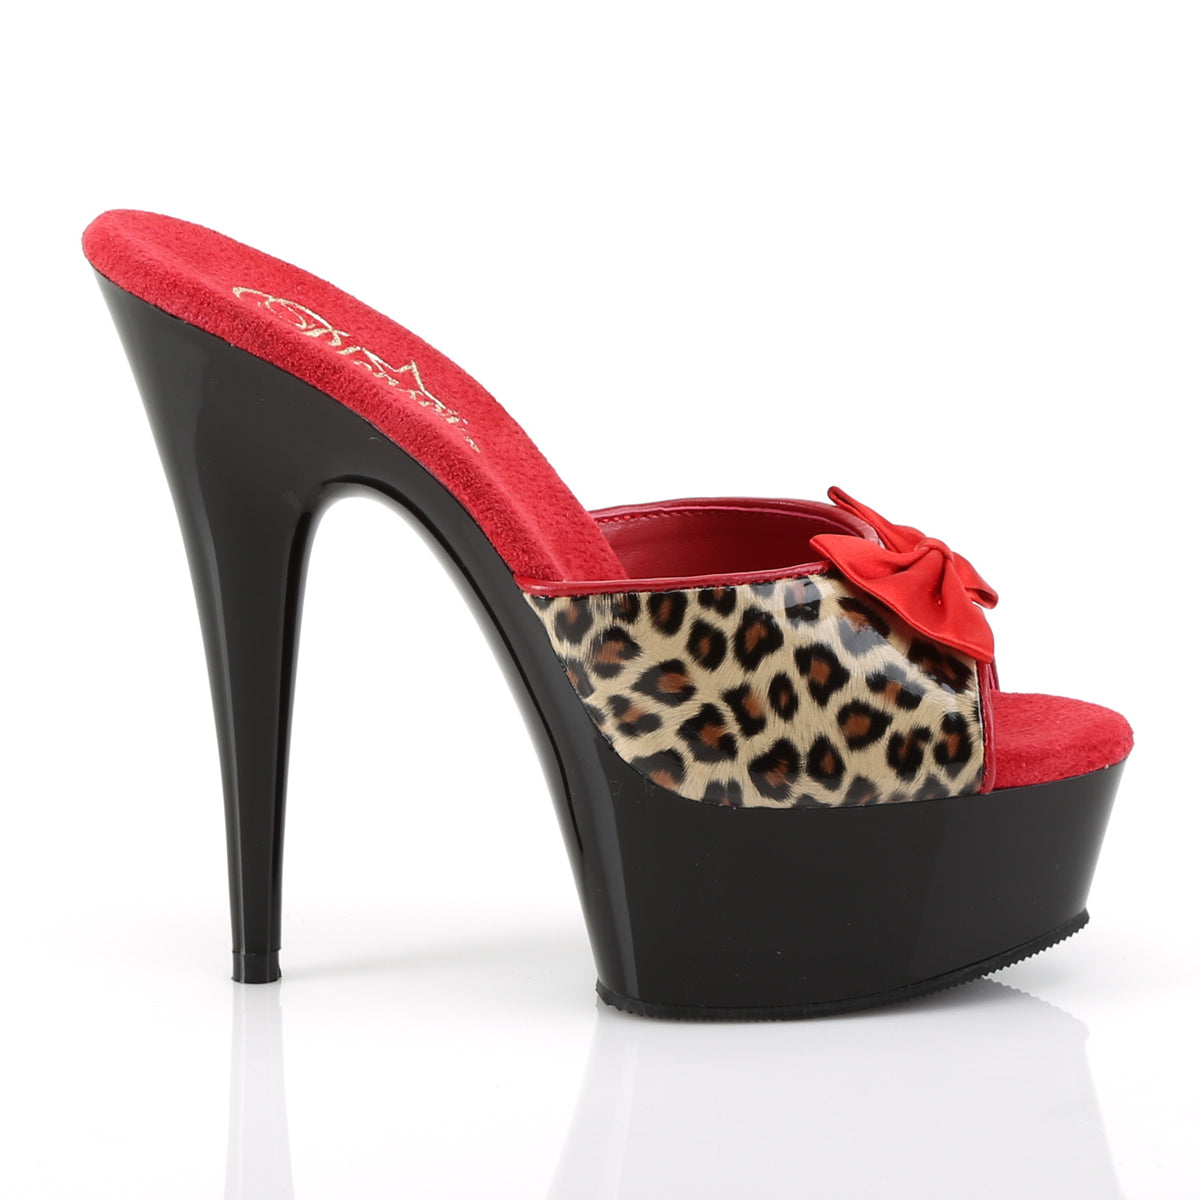 DELIGHT-601-6 6" Heel Tan Leopard Print Pole Dancer Shoes-Pleaser- Sexy Shoes Fetish Heels